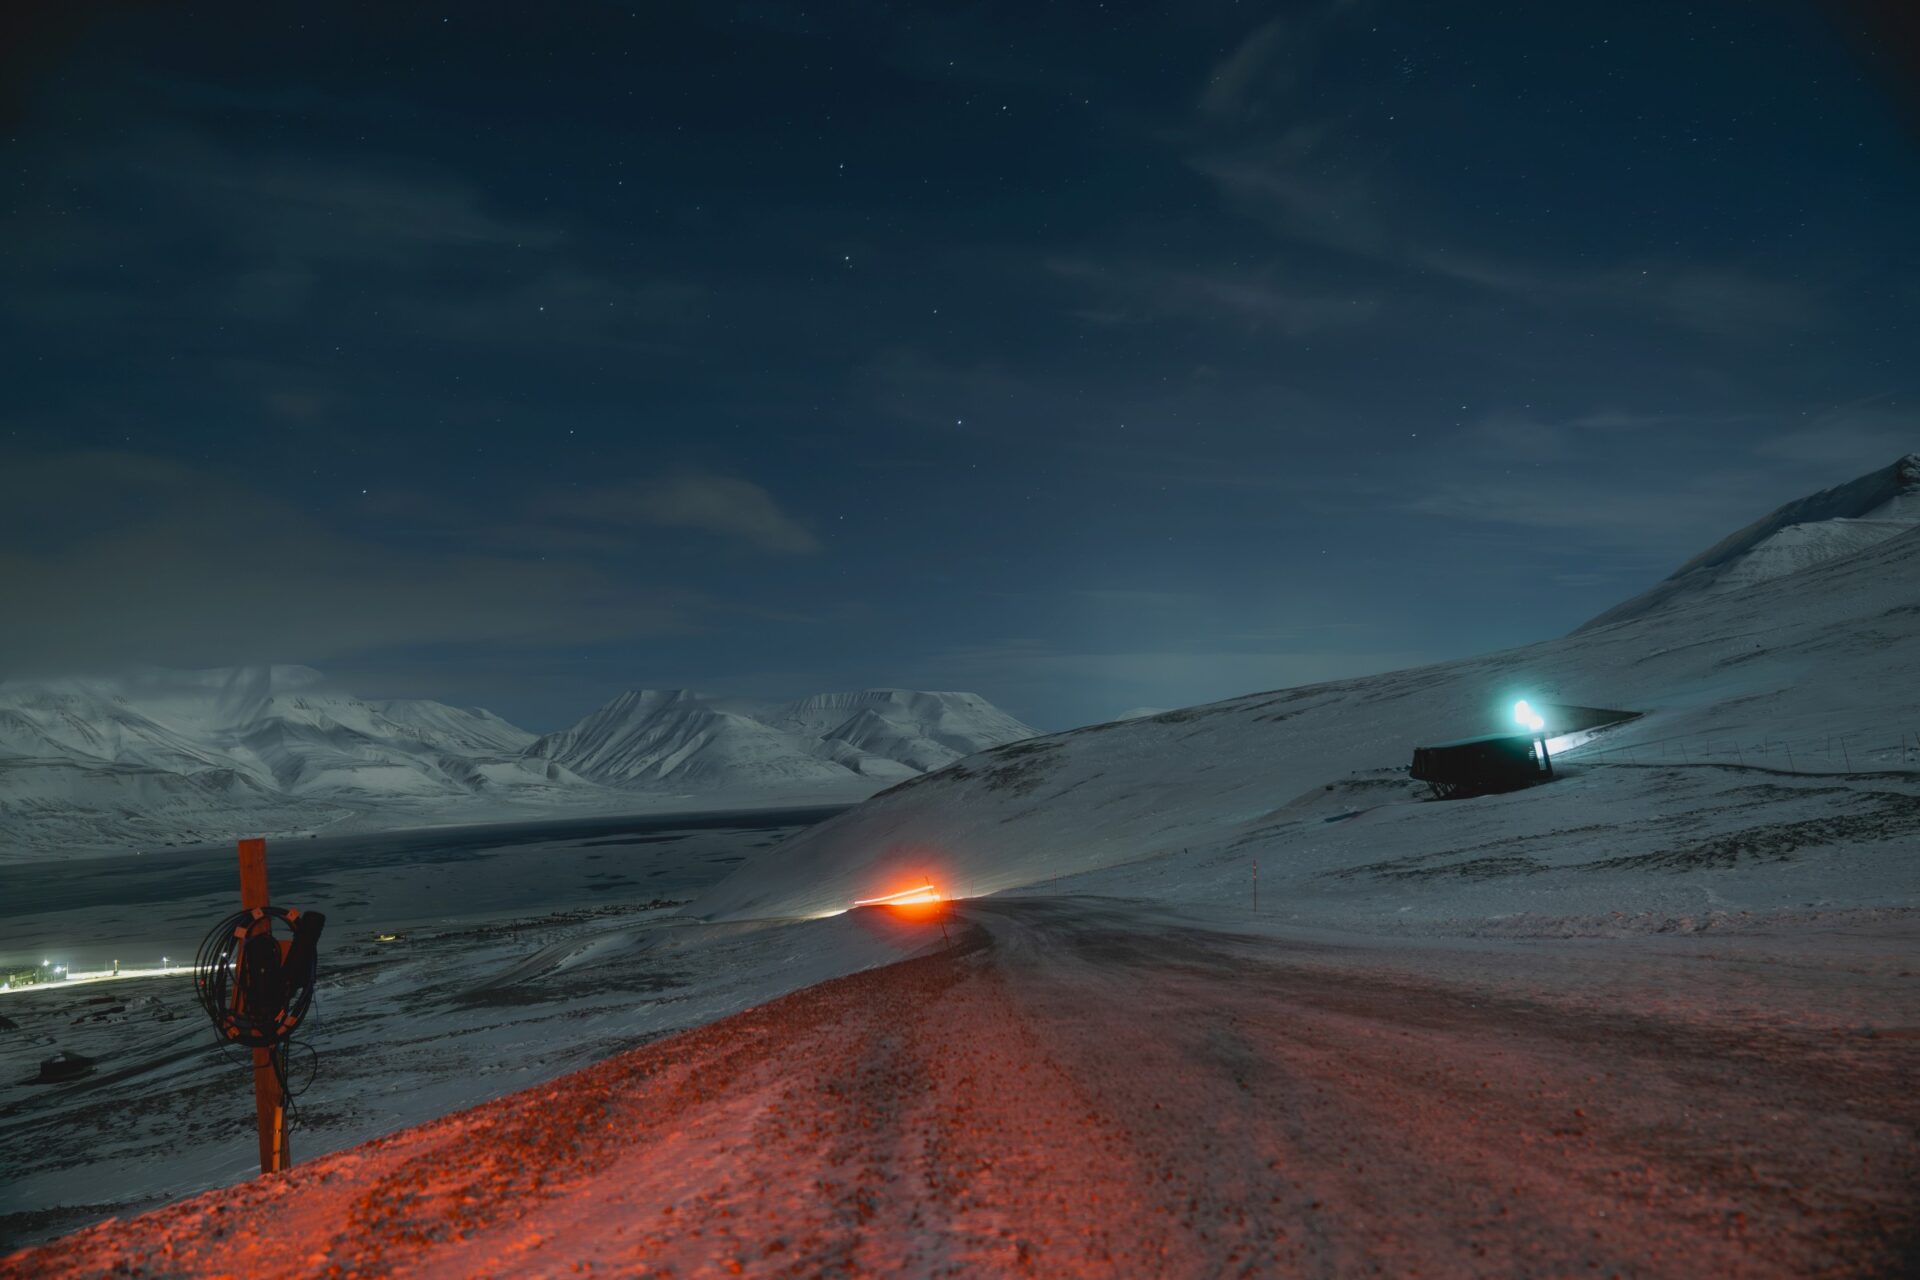 Svalbard photography